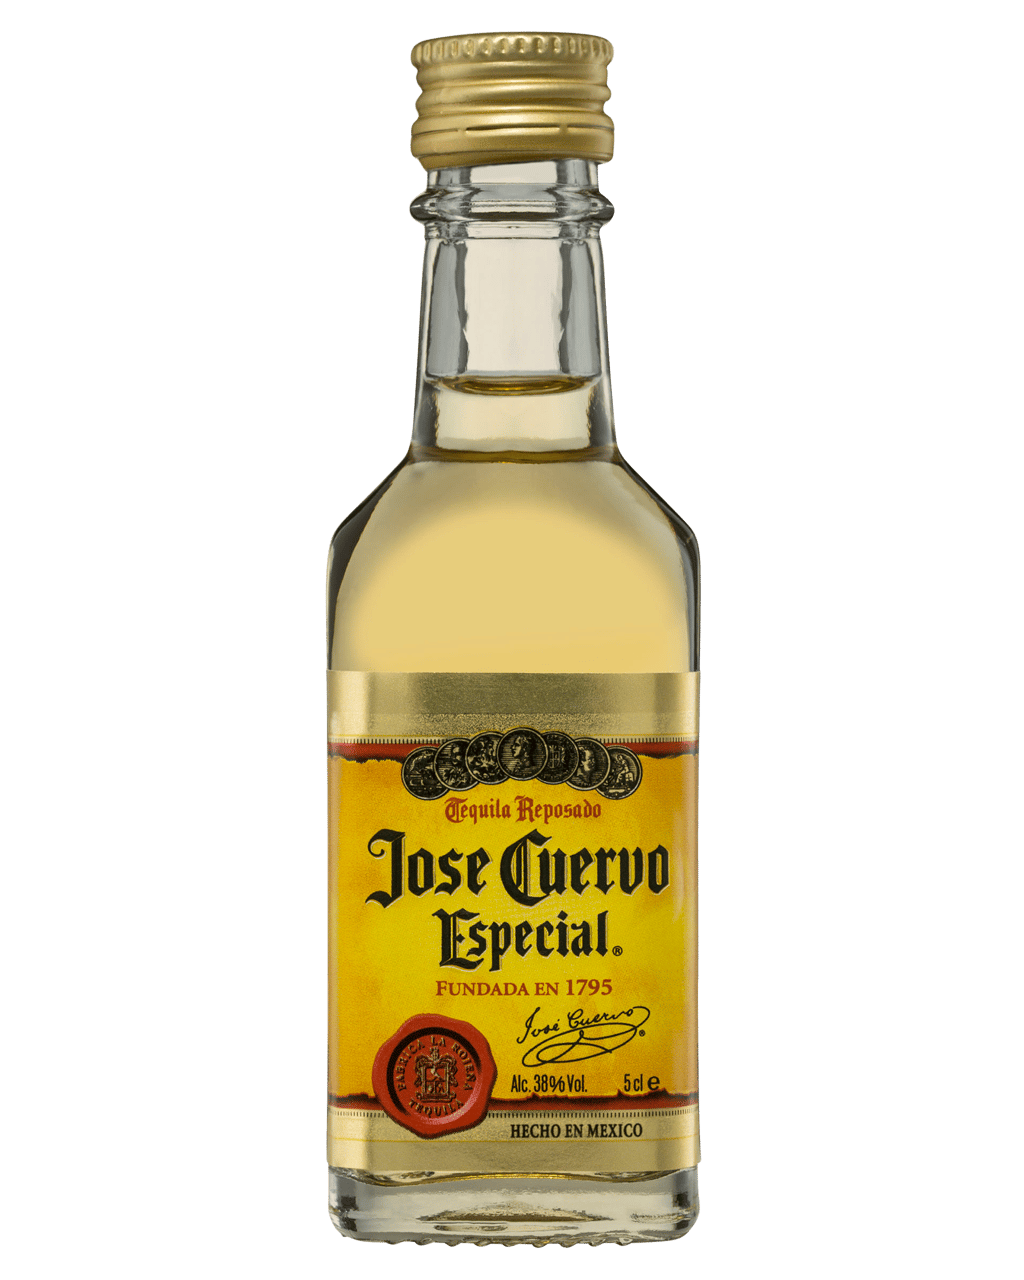 Buy Jose Cuervo Especial Reposado Tequila 50ml Online Lowest Price Guarantee Best Deals 3209